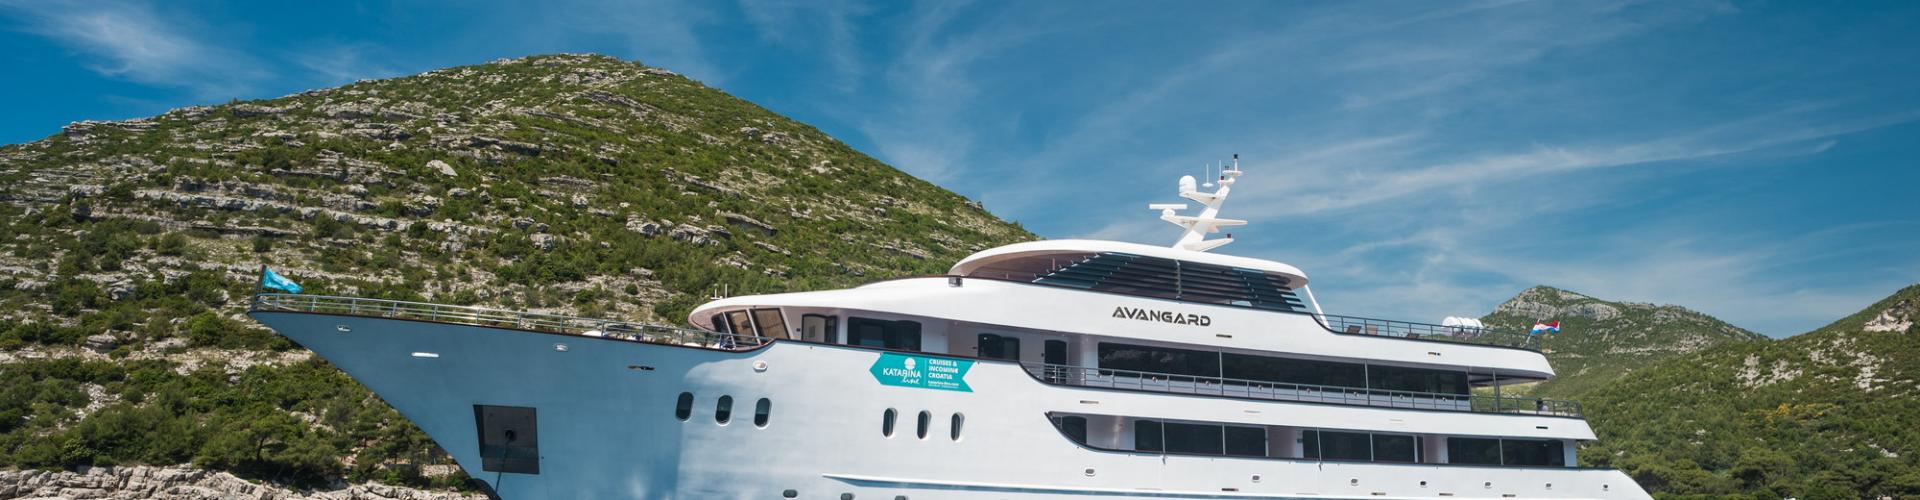 Deluxe Superior cruiser MV Avangard- motor yacht